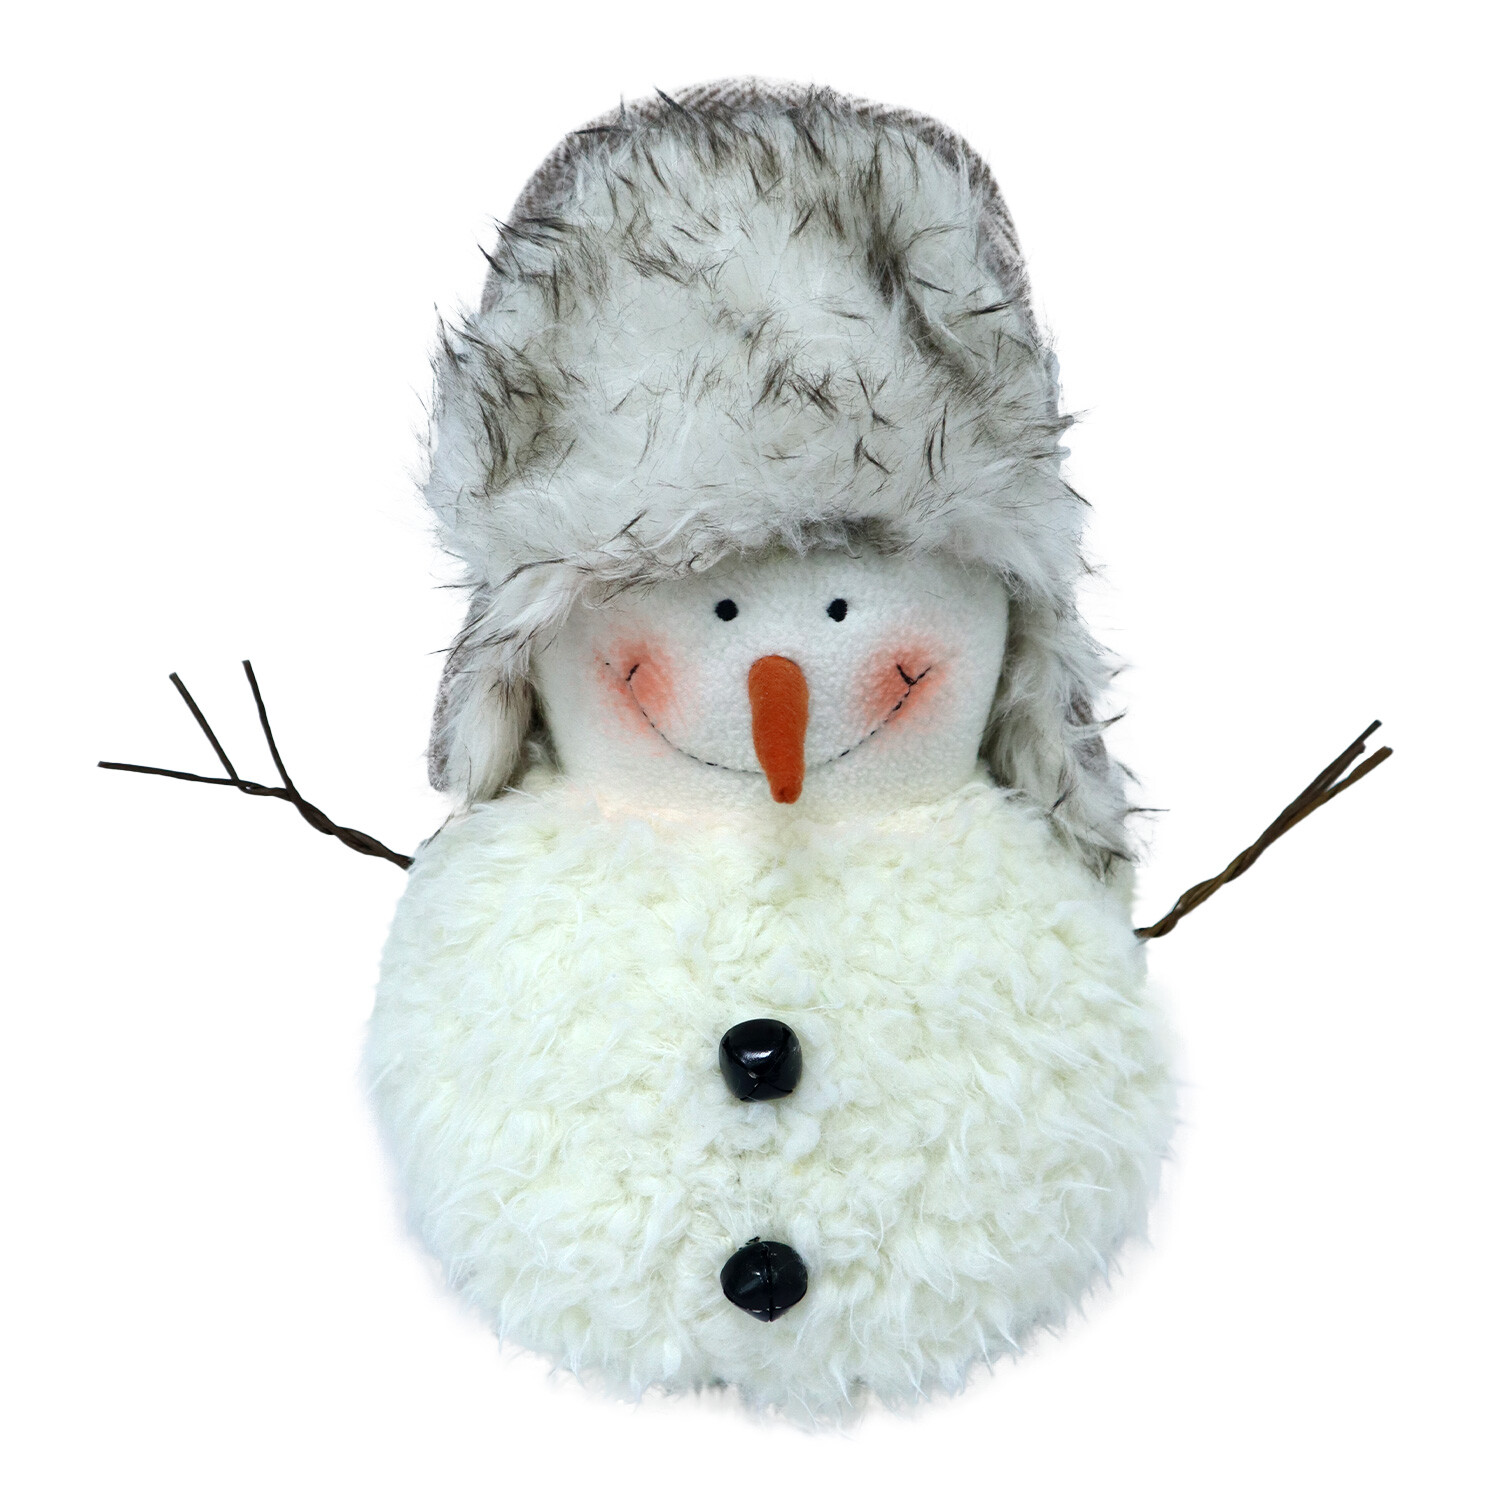 Plush Sitting Snowman Ornament Image